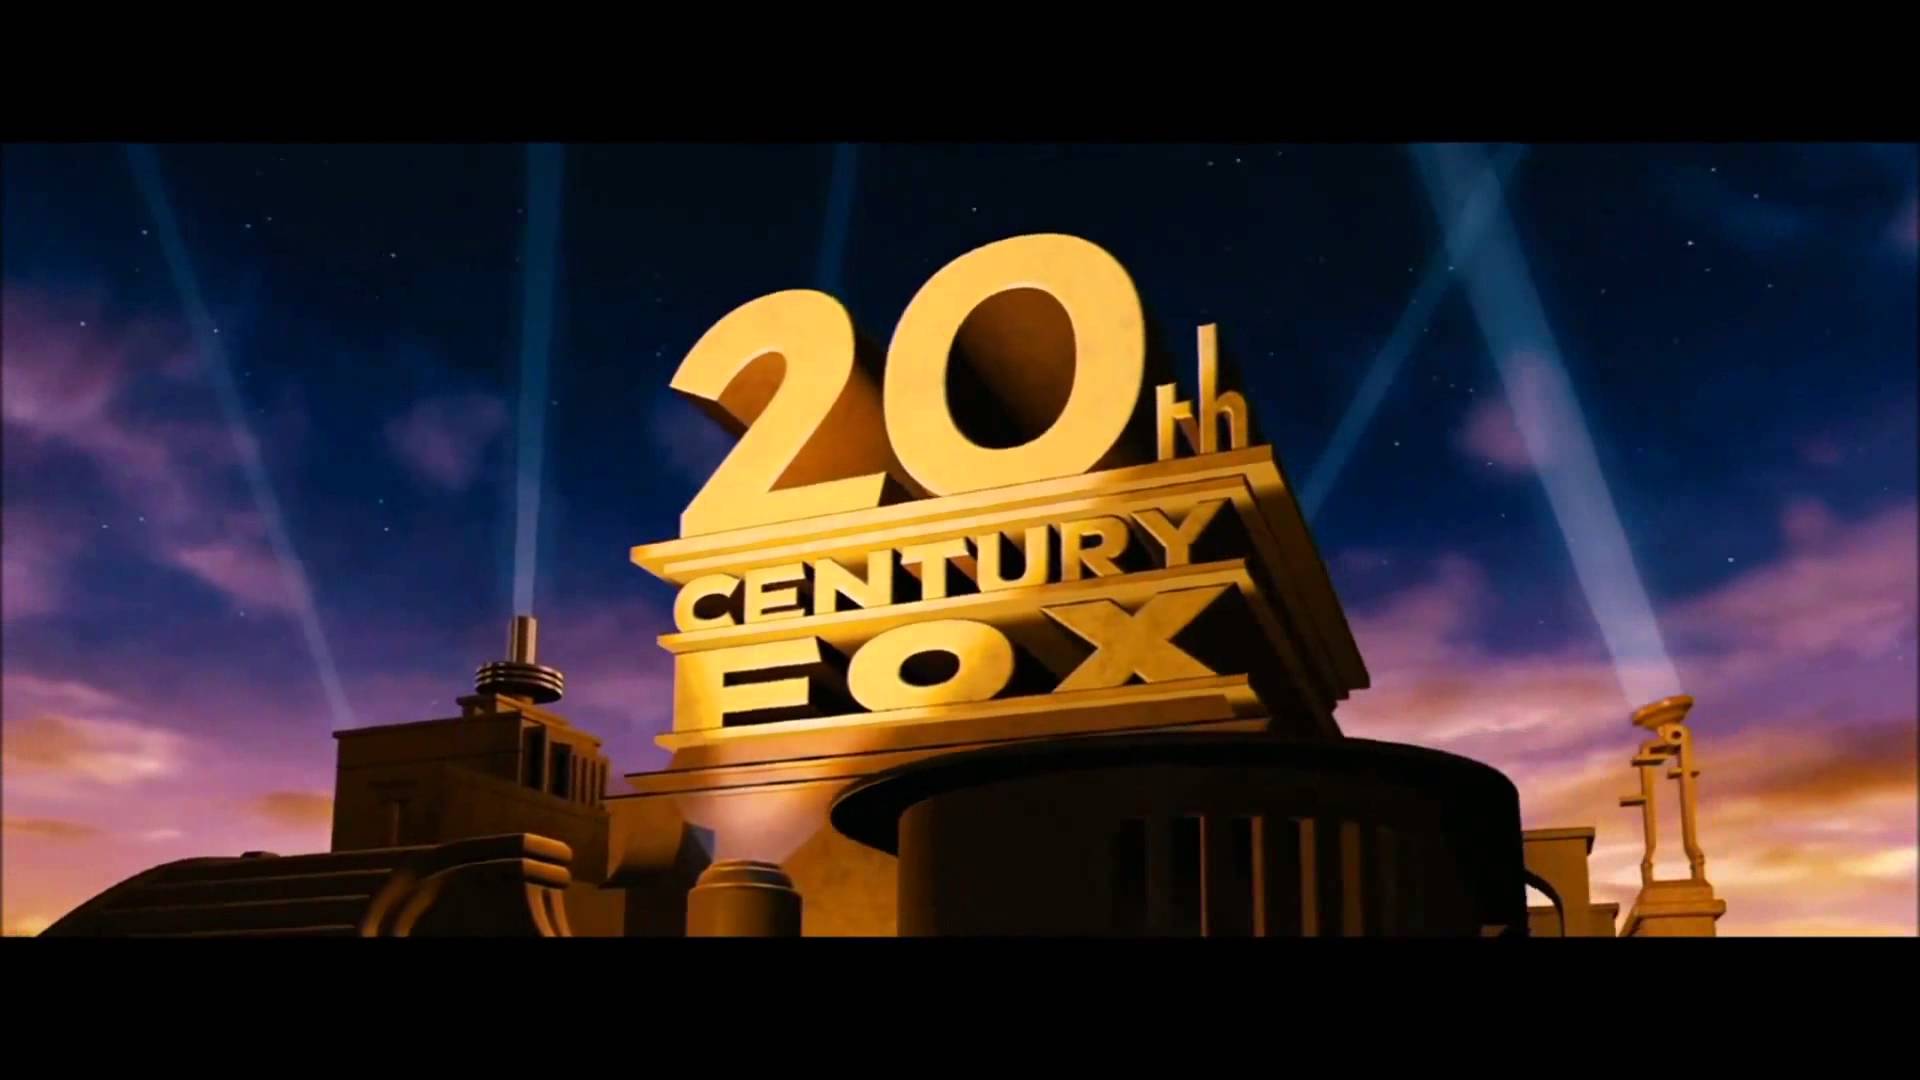 20th century fox logo 01